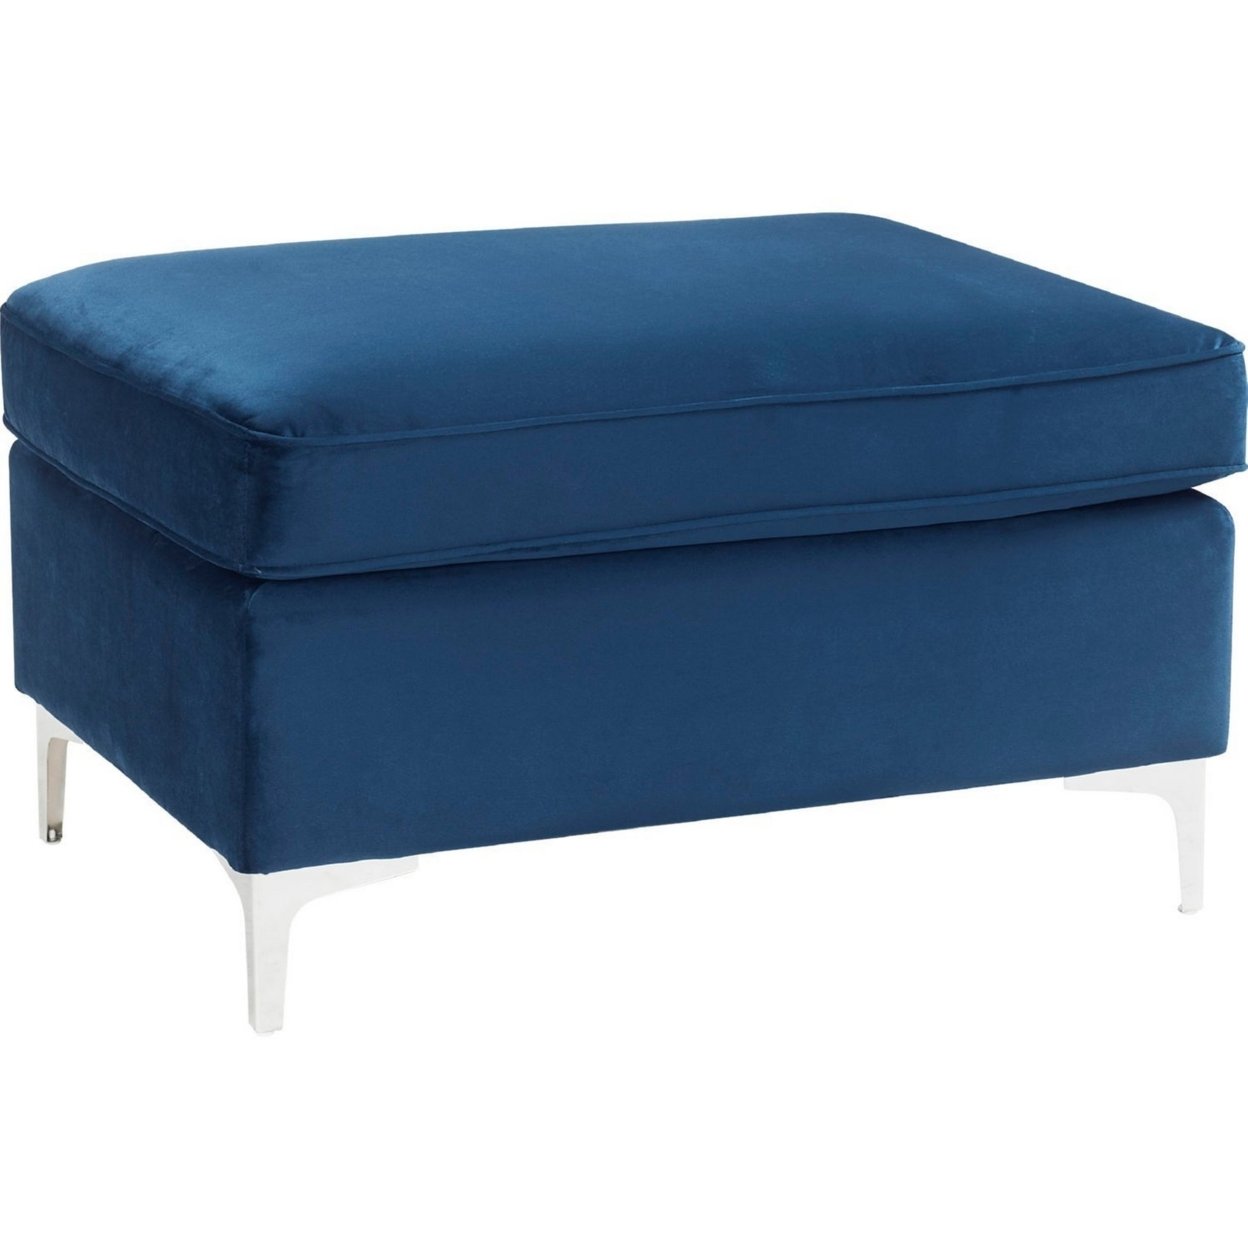 Ottoman With Removable Cushion Seat And Sleek Legs, Blue- Saltoro Sherpi